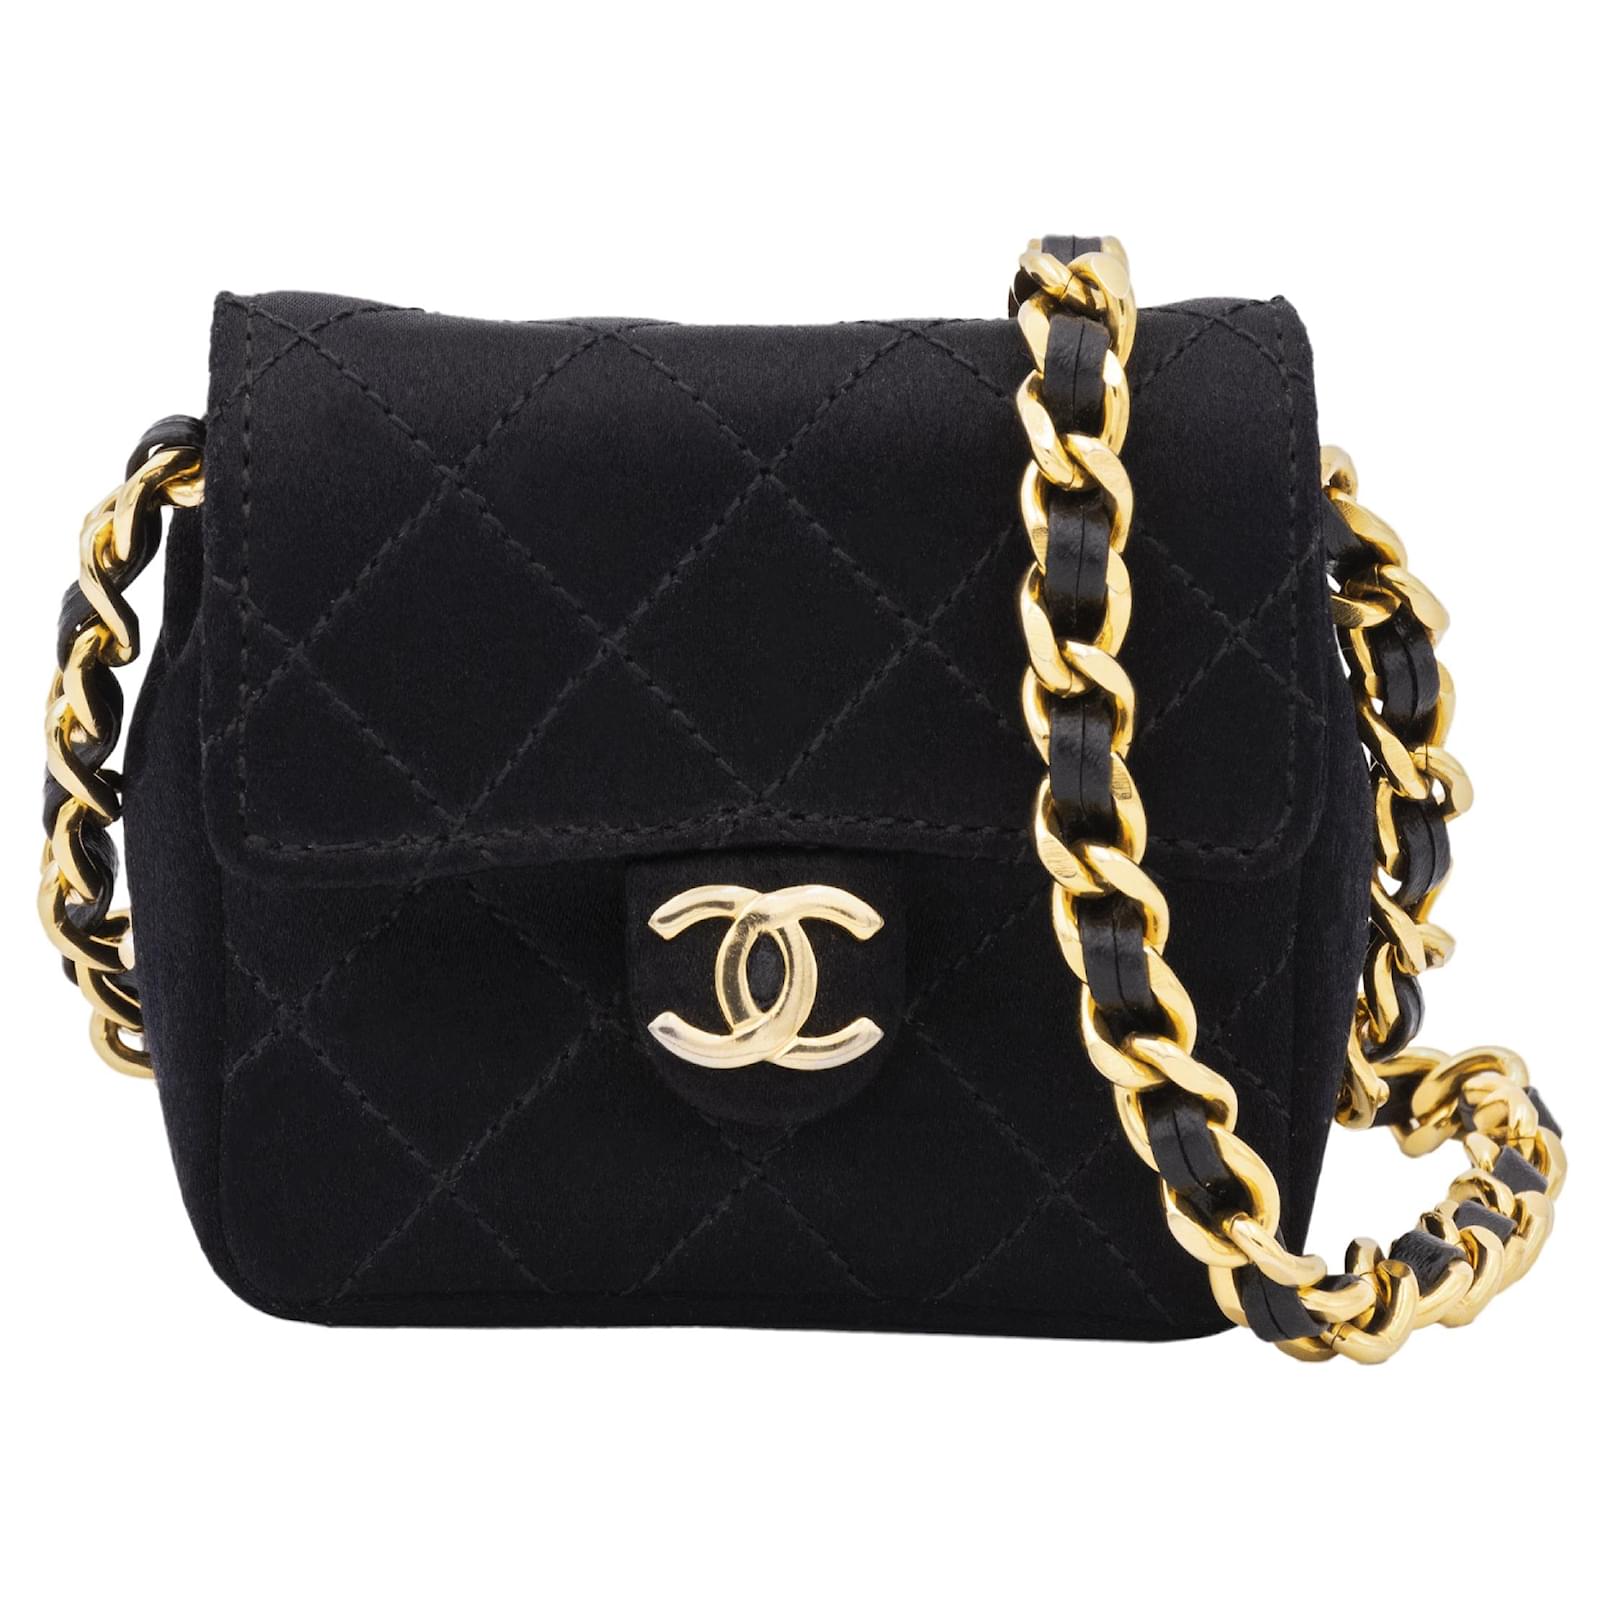 Mini Bags Reign Supreme on the Chanel Spring Runway - PurseBlog